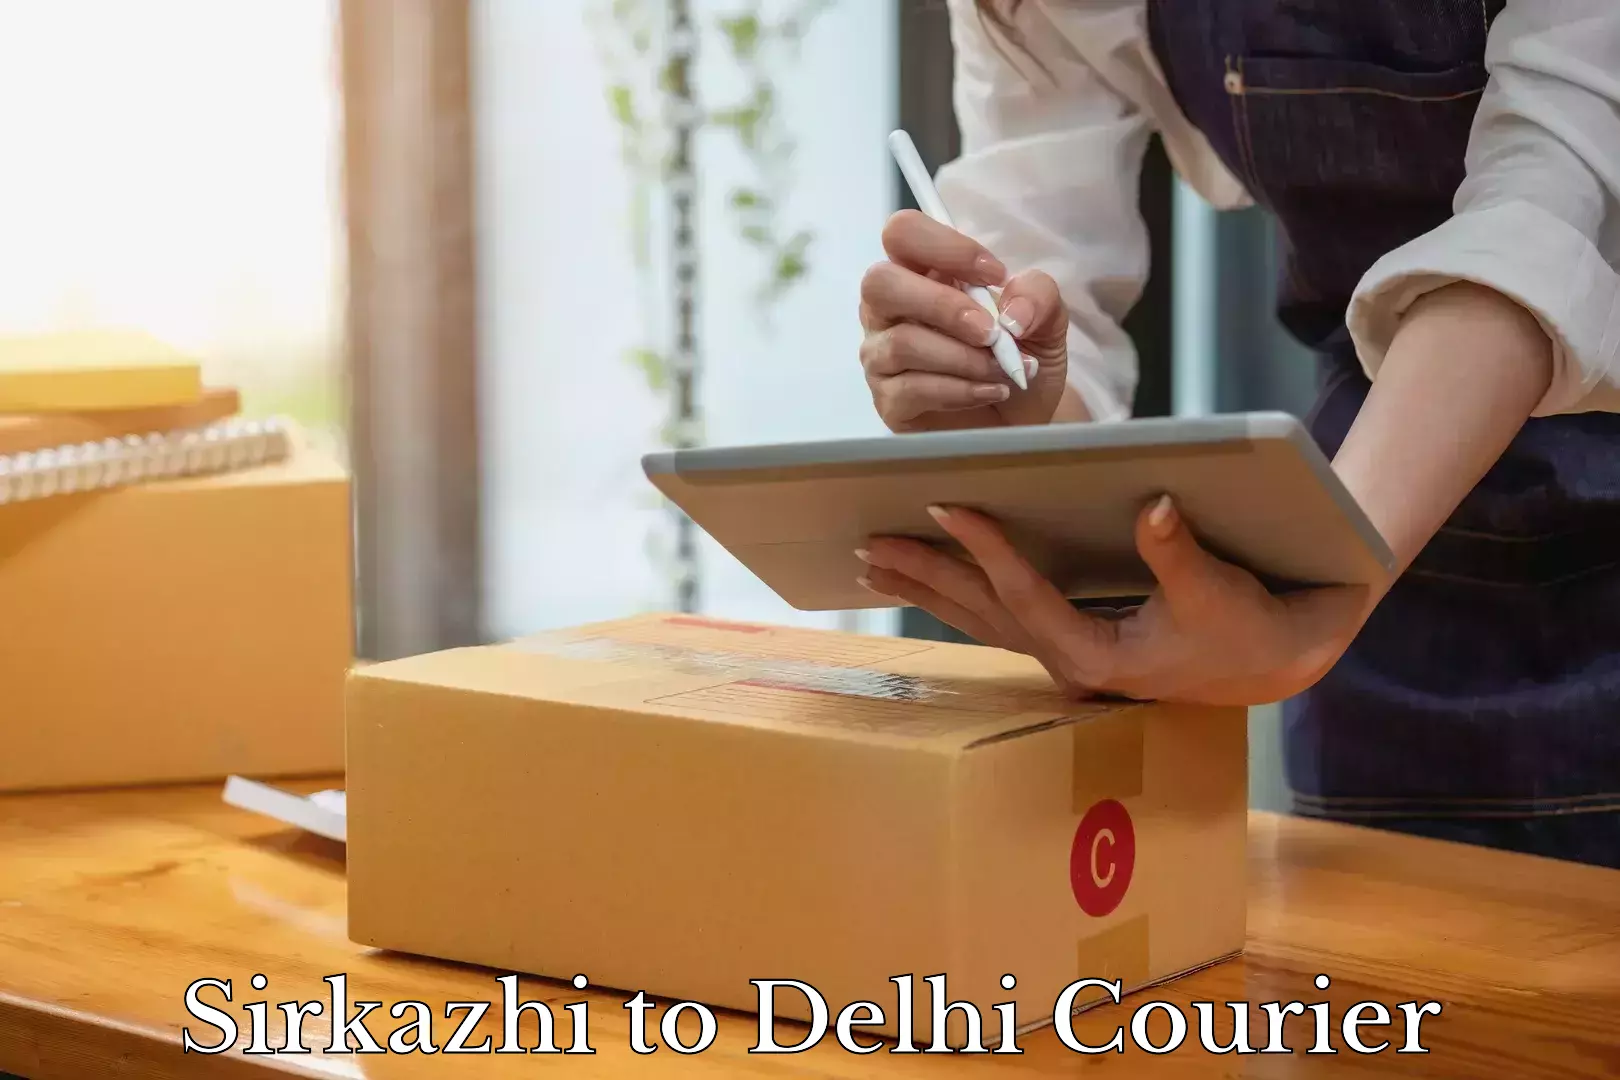 Luggage shipment specialists Sirkazhi to East Delhi